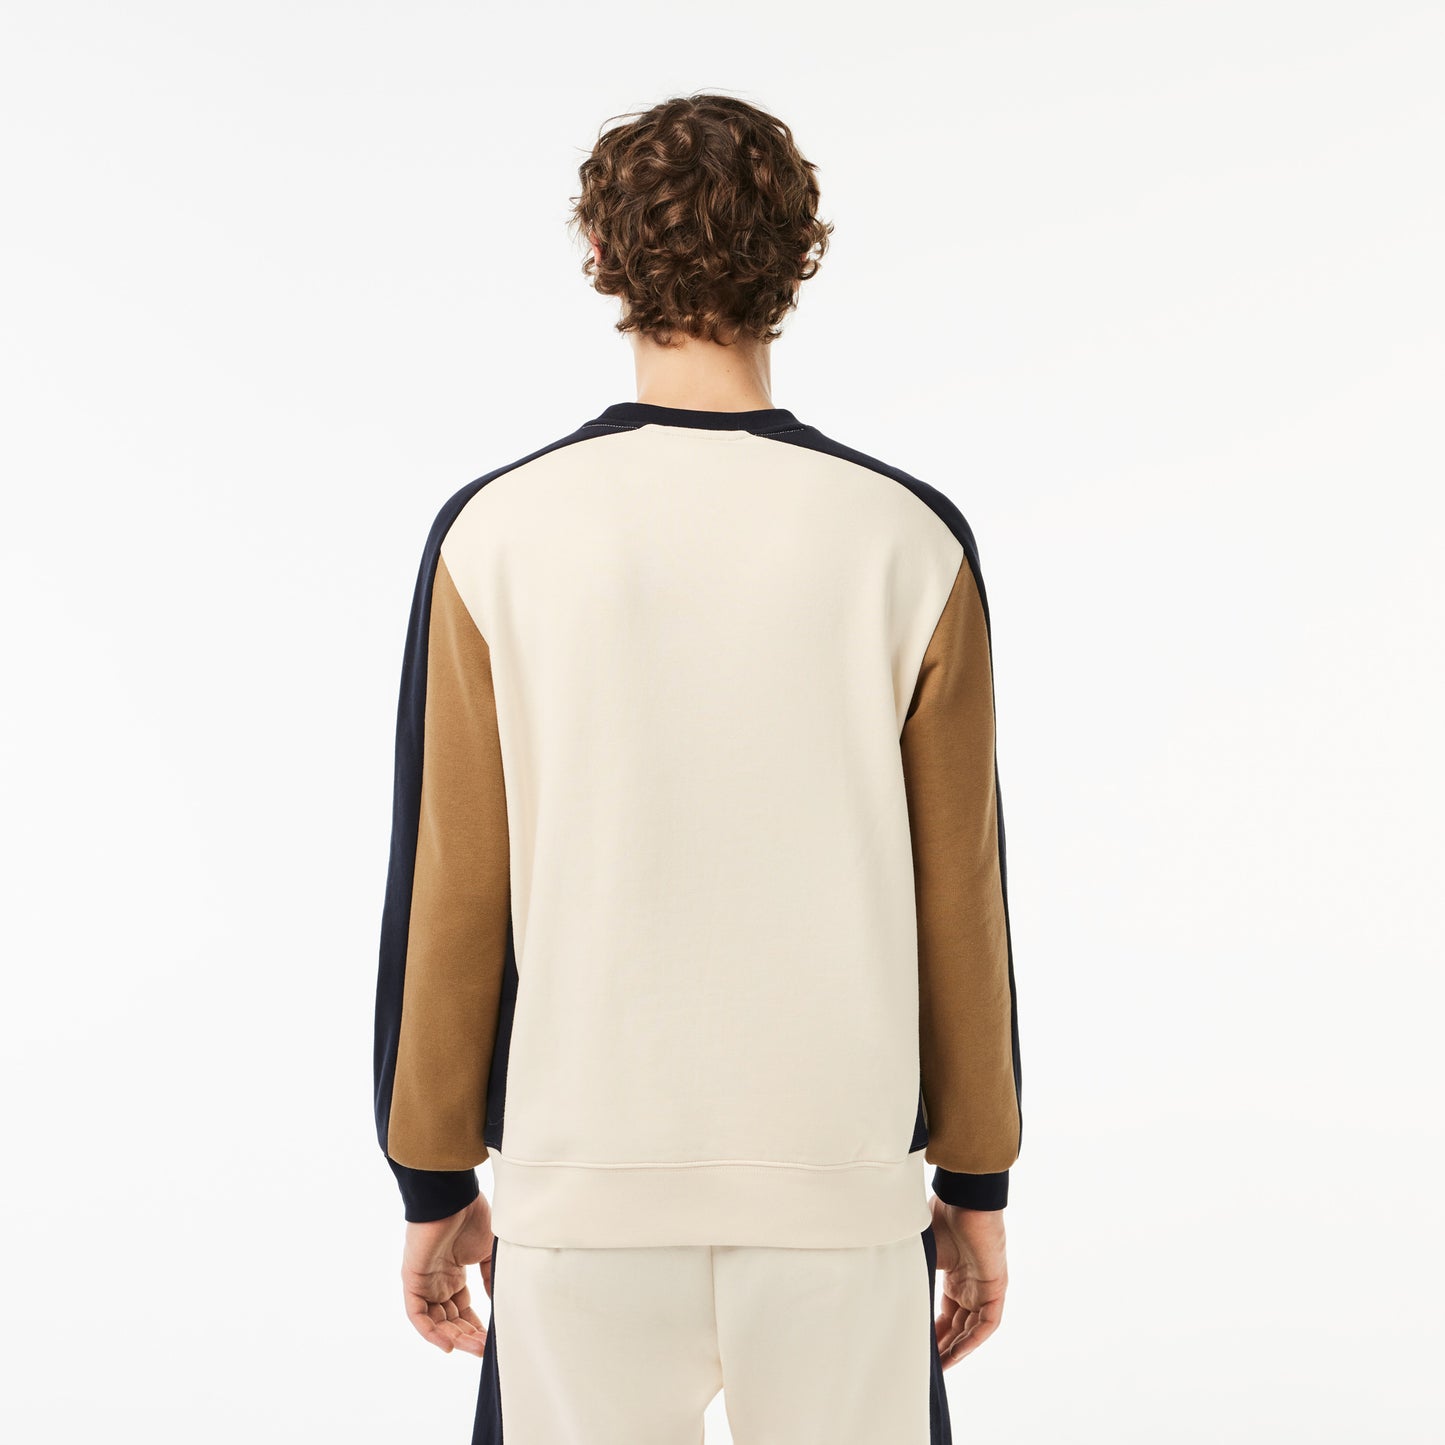 Brushed Fleece Colourblock Jogger Sweatshirt - SH1299